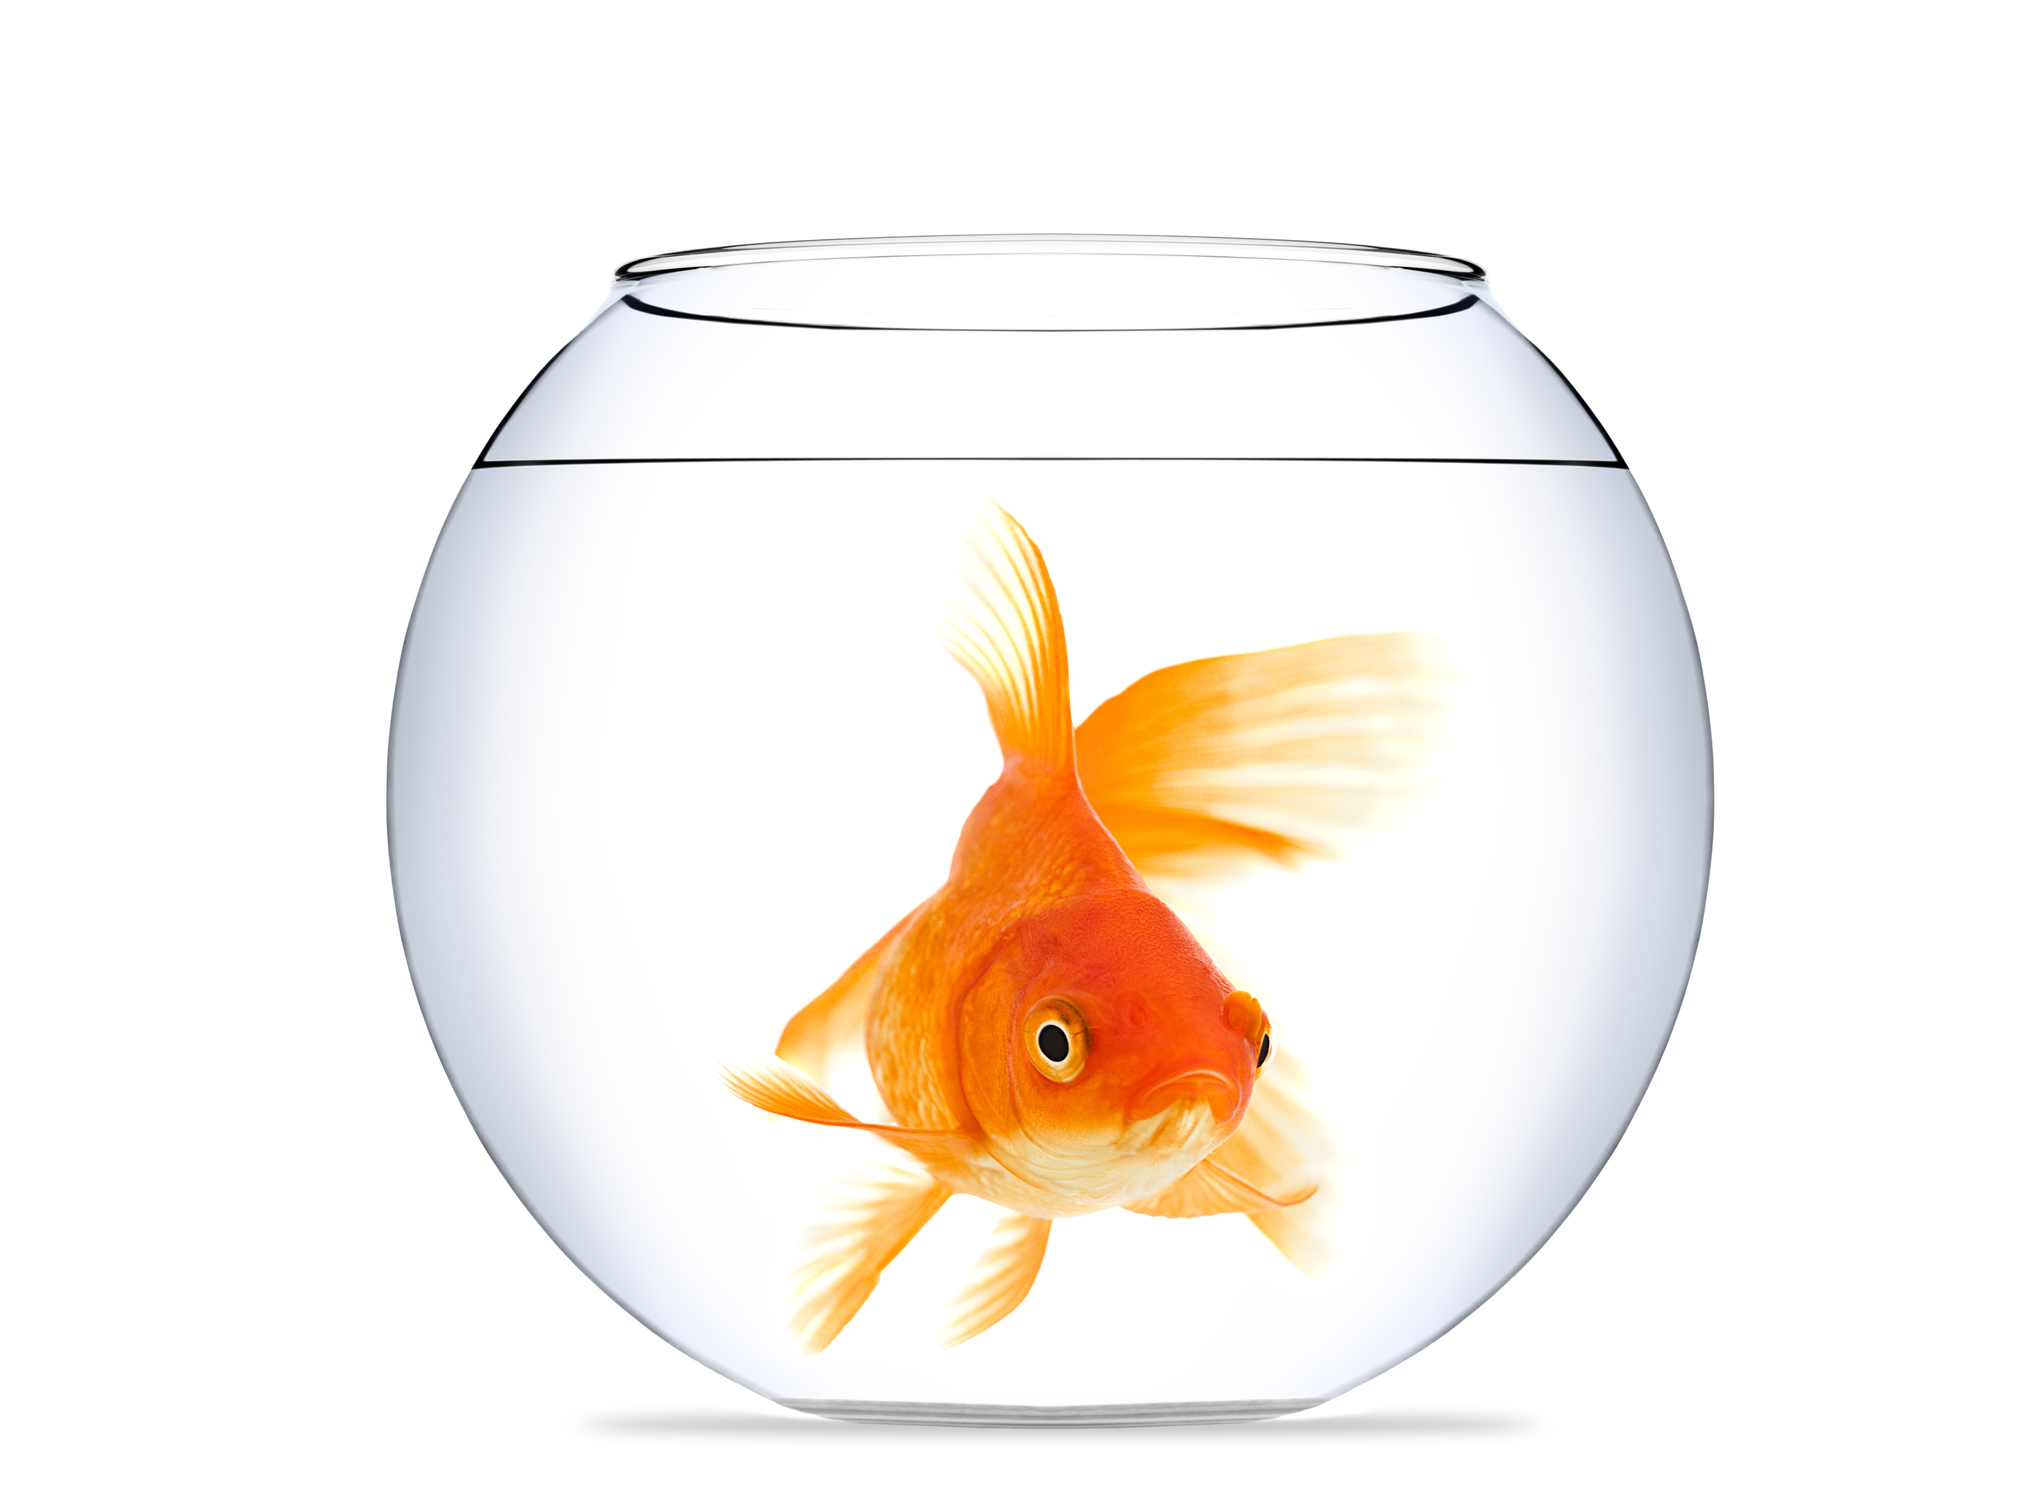 Goldfish bowls, identity theft and data protection ...